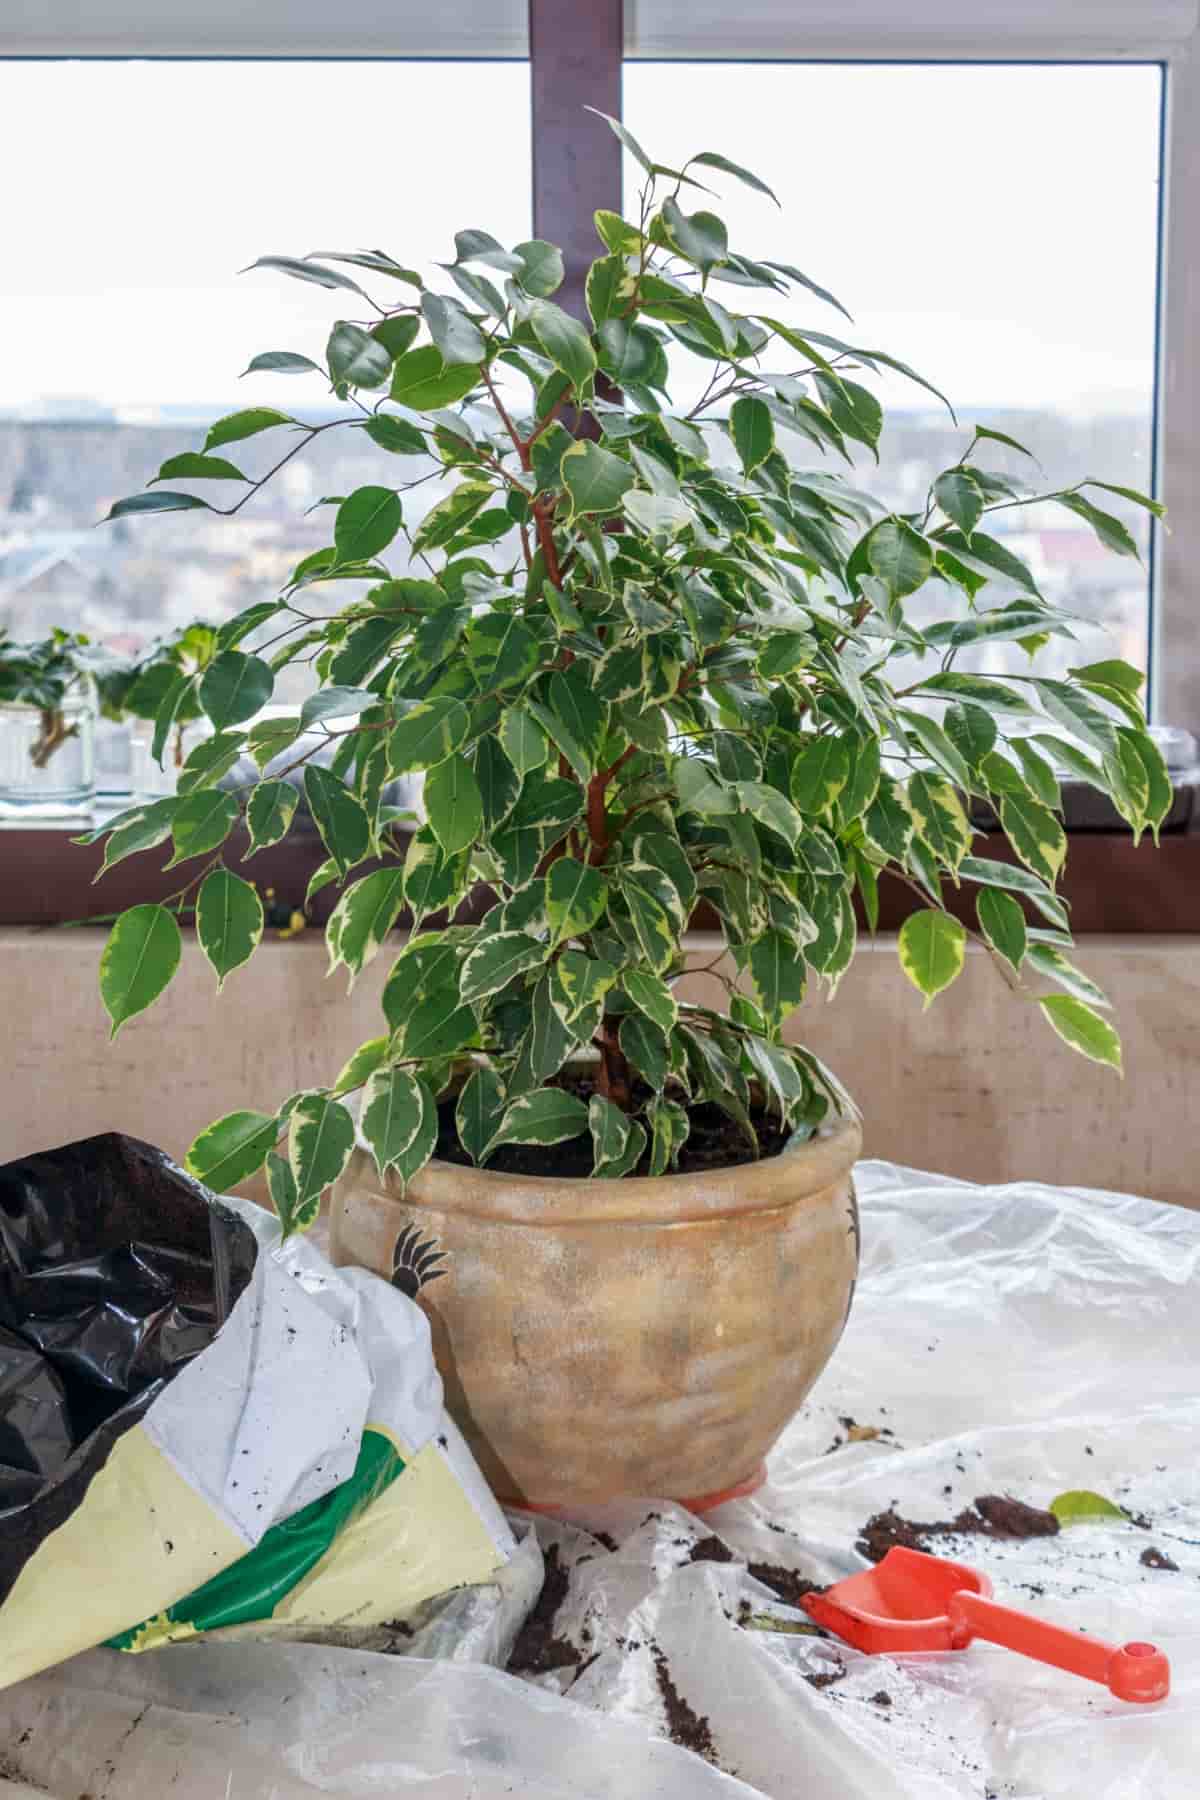 Transplanting a Houseplant Into a New Pot